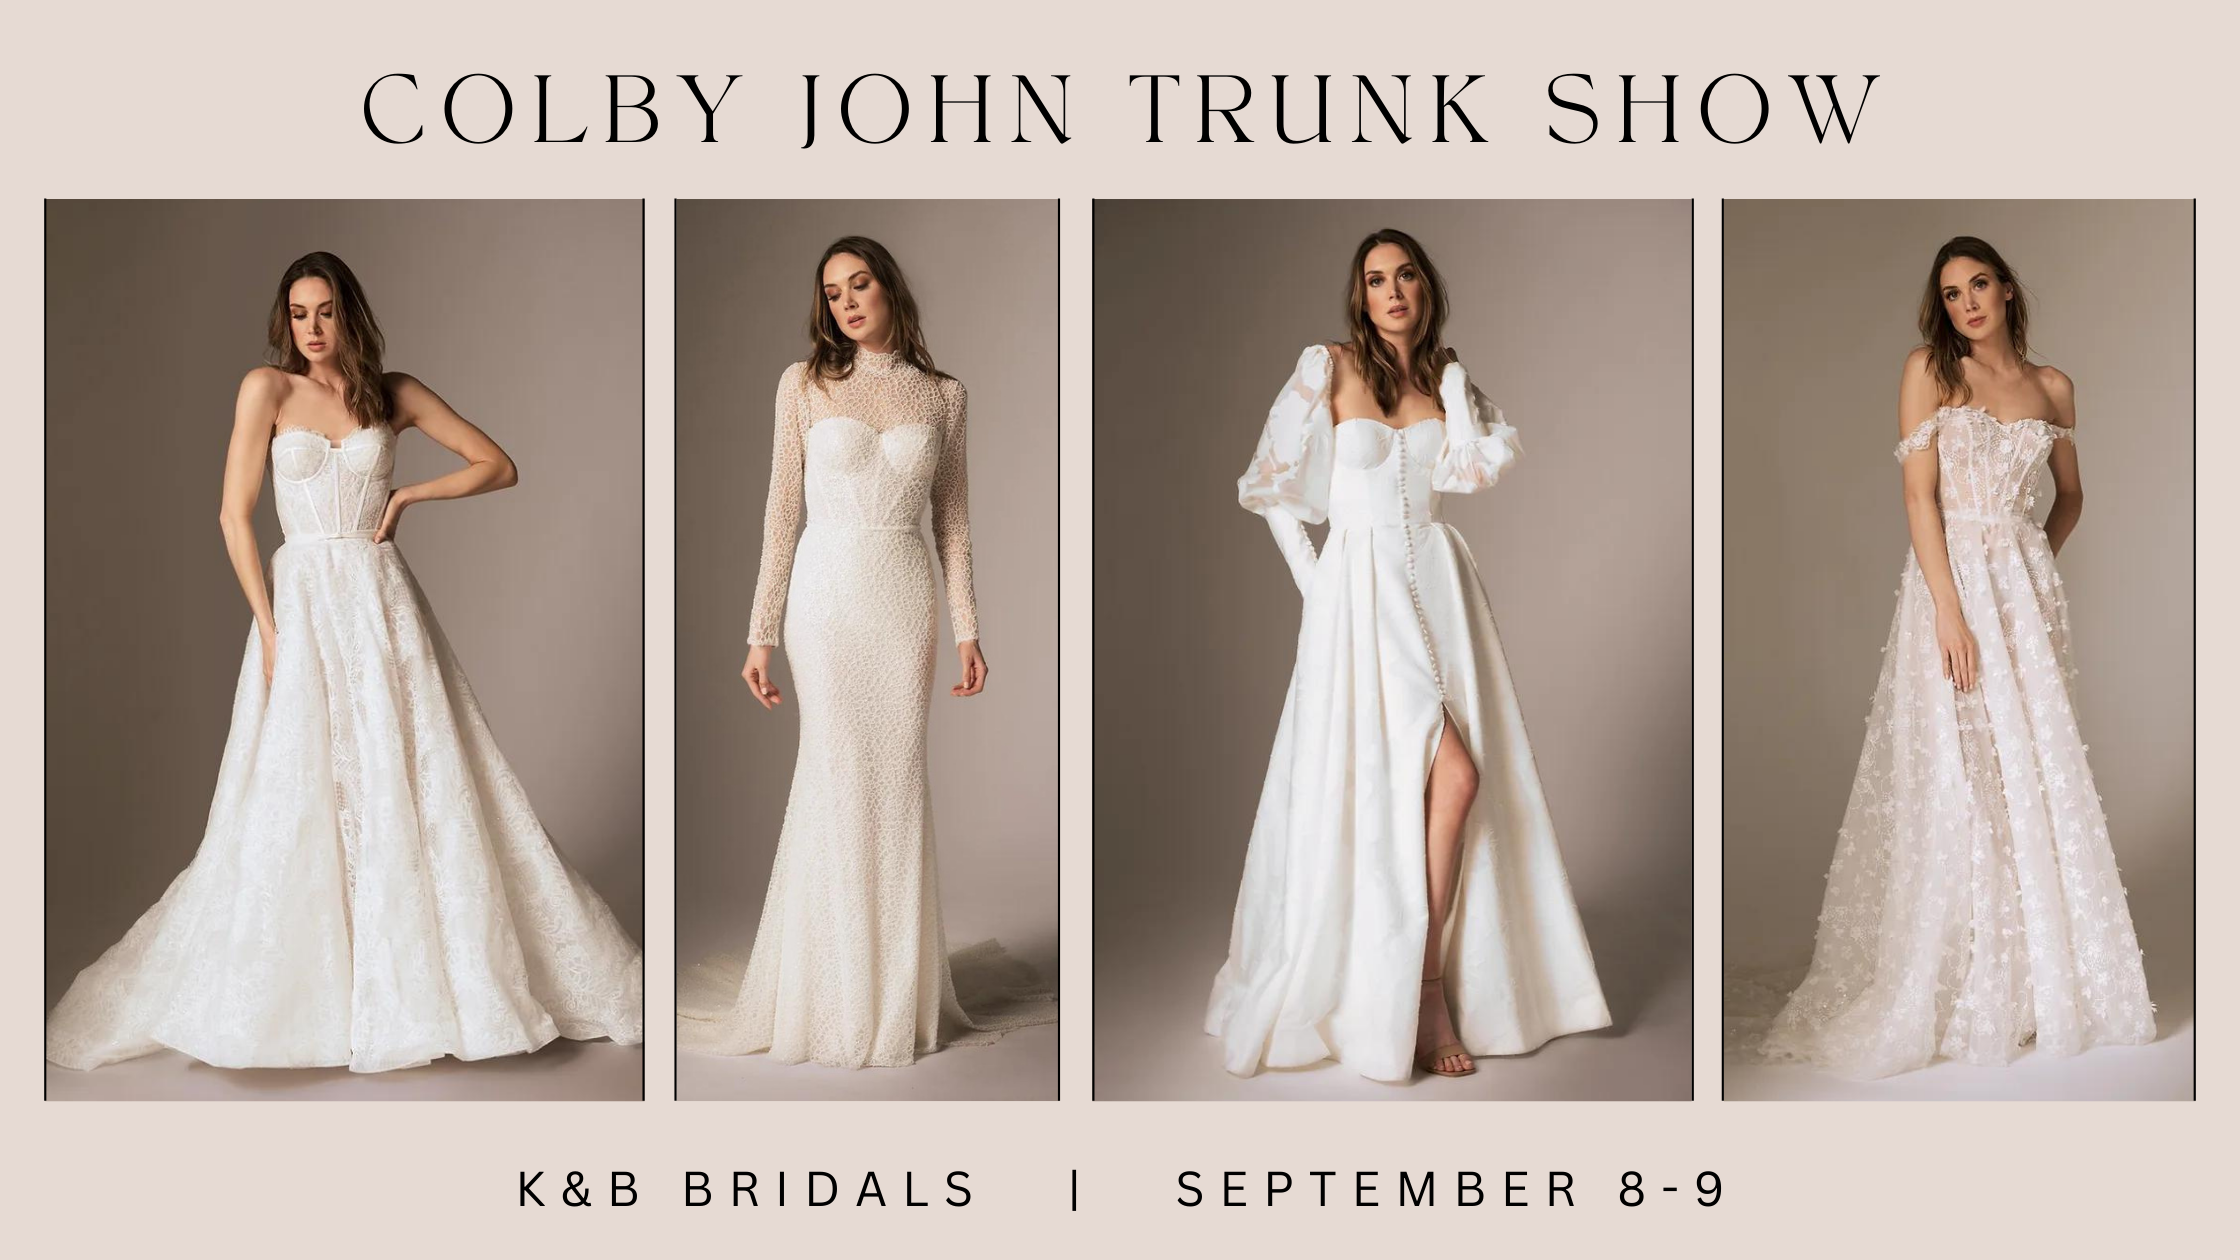 Main Street Bridal Trunk Show August 25-27